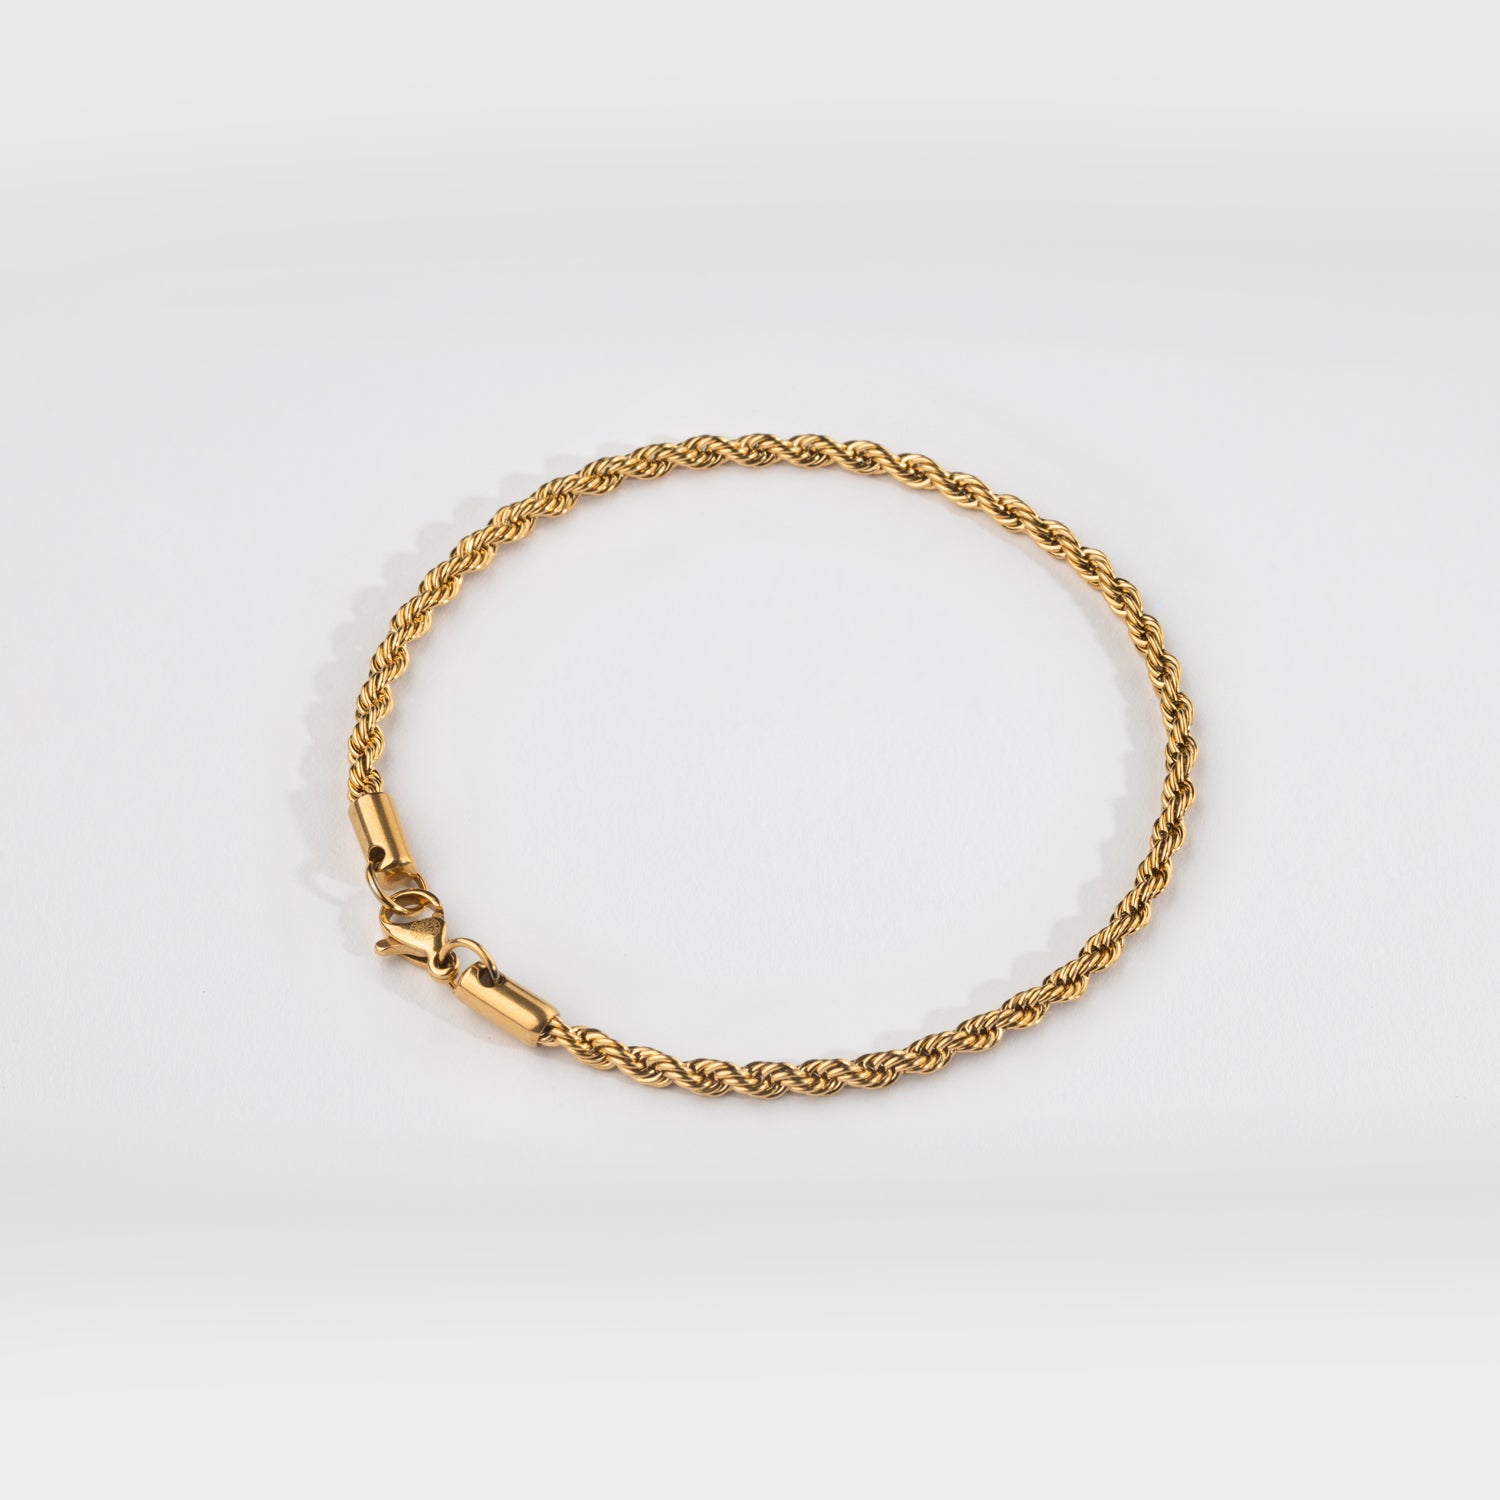 NL Rope bracelet - Gold-toned